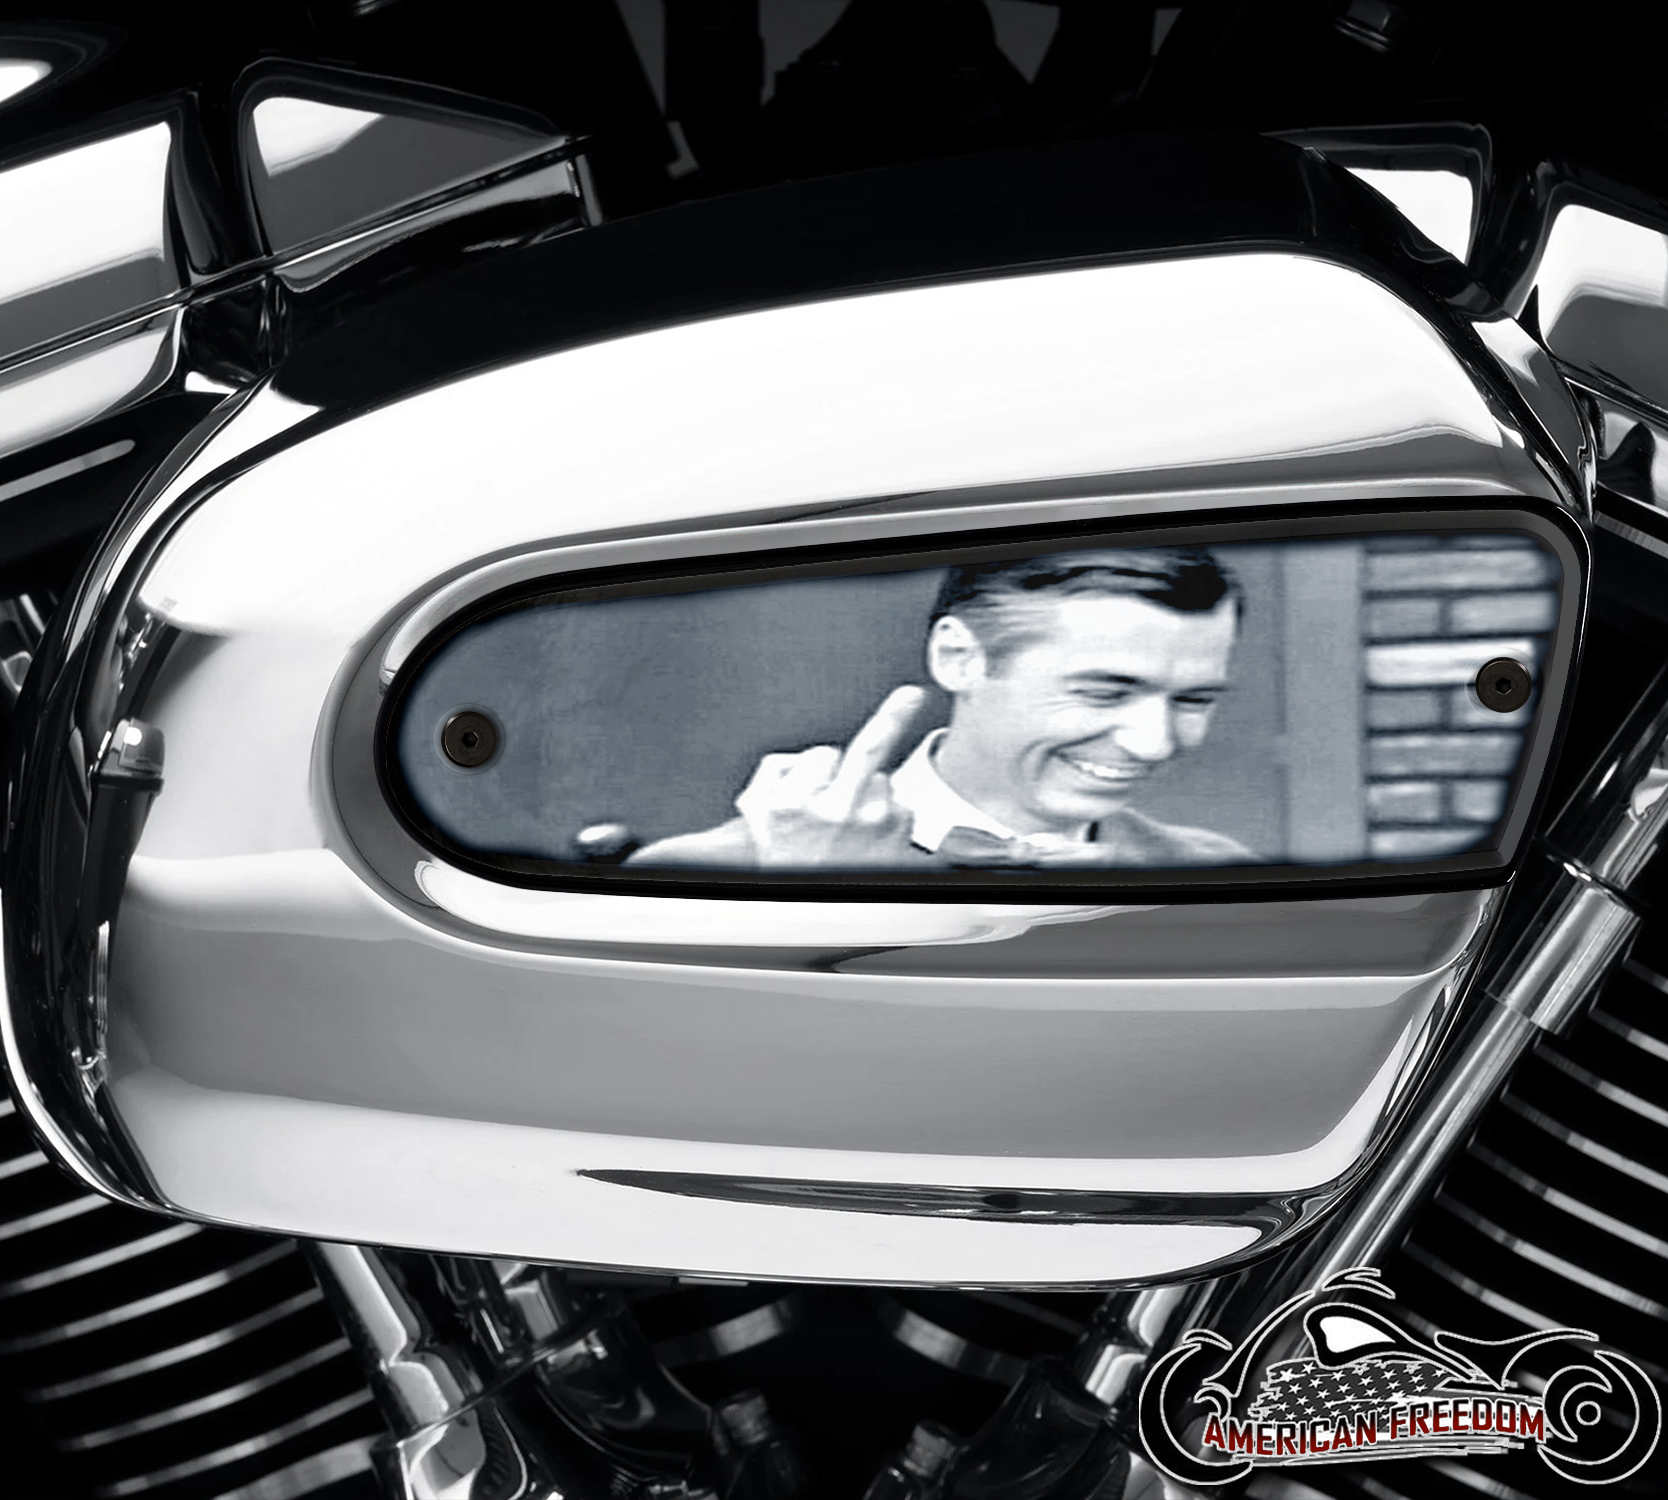 Harley Davidson Wedge Air Cleaner Insert - Mr. Rogers